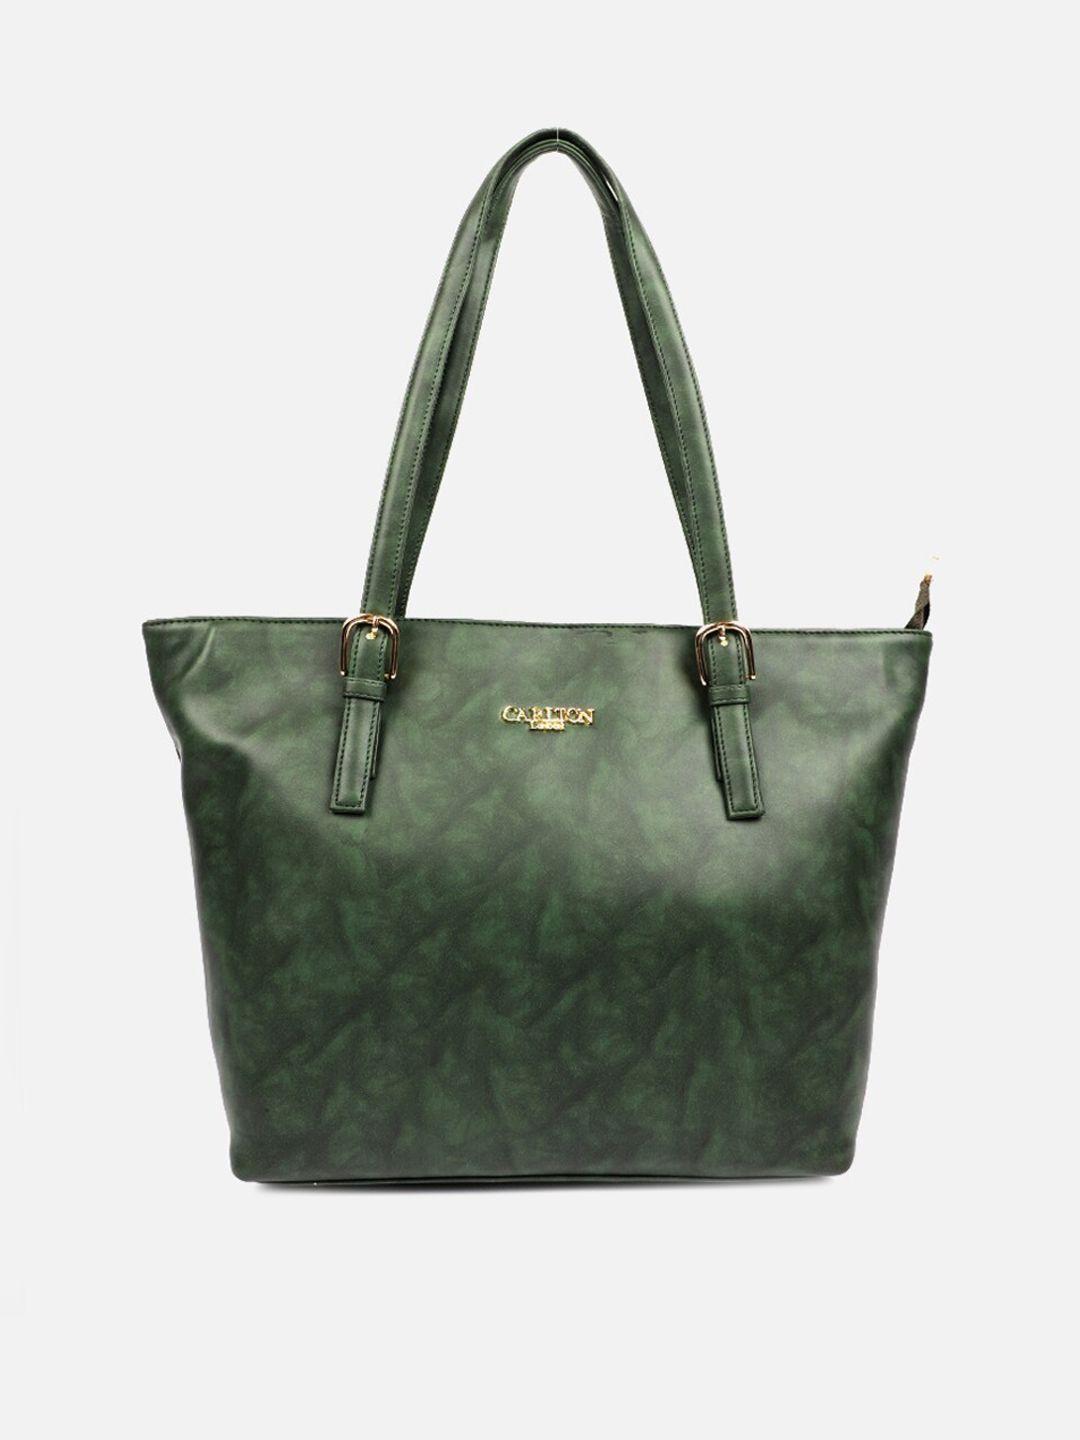 carlton london green textured structured shoulder bag